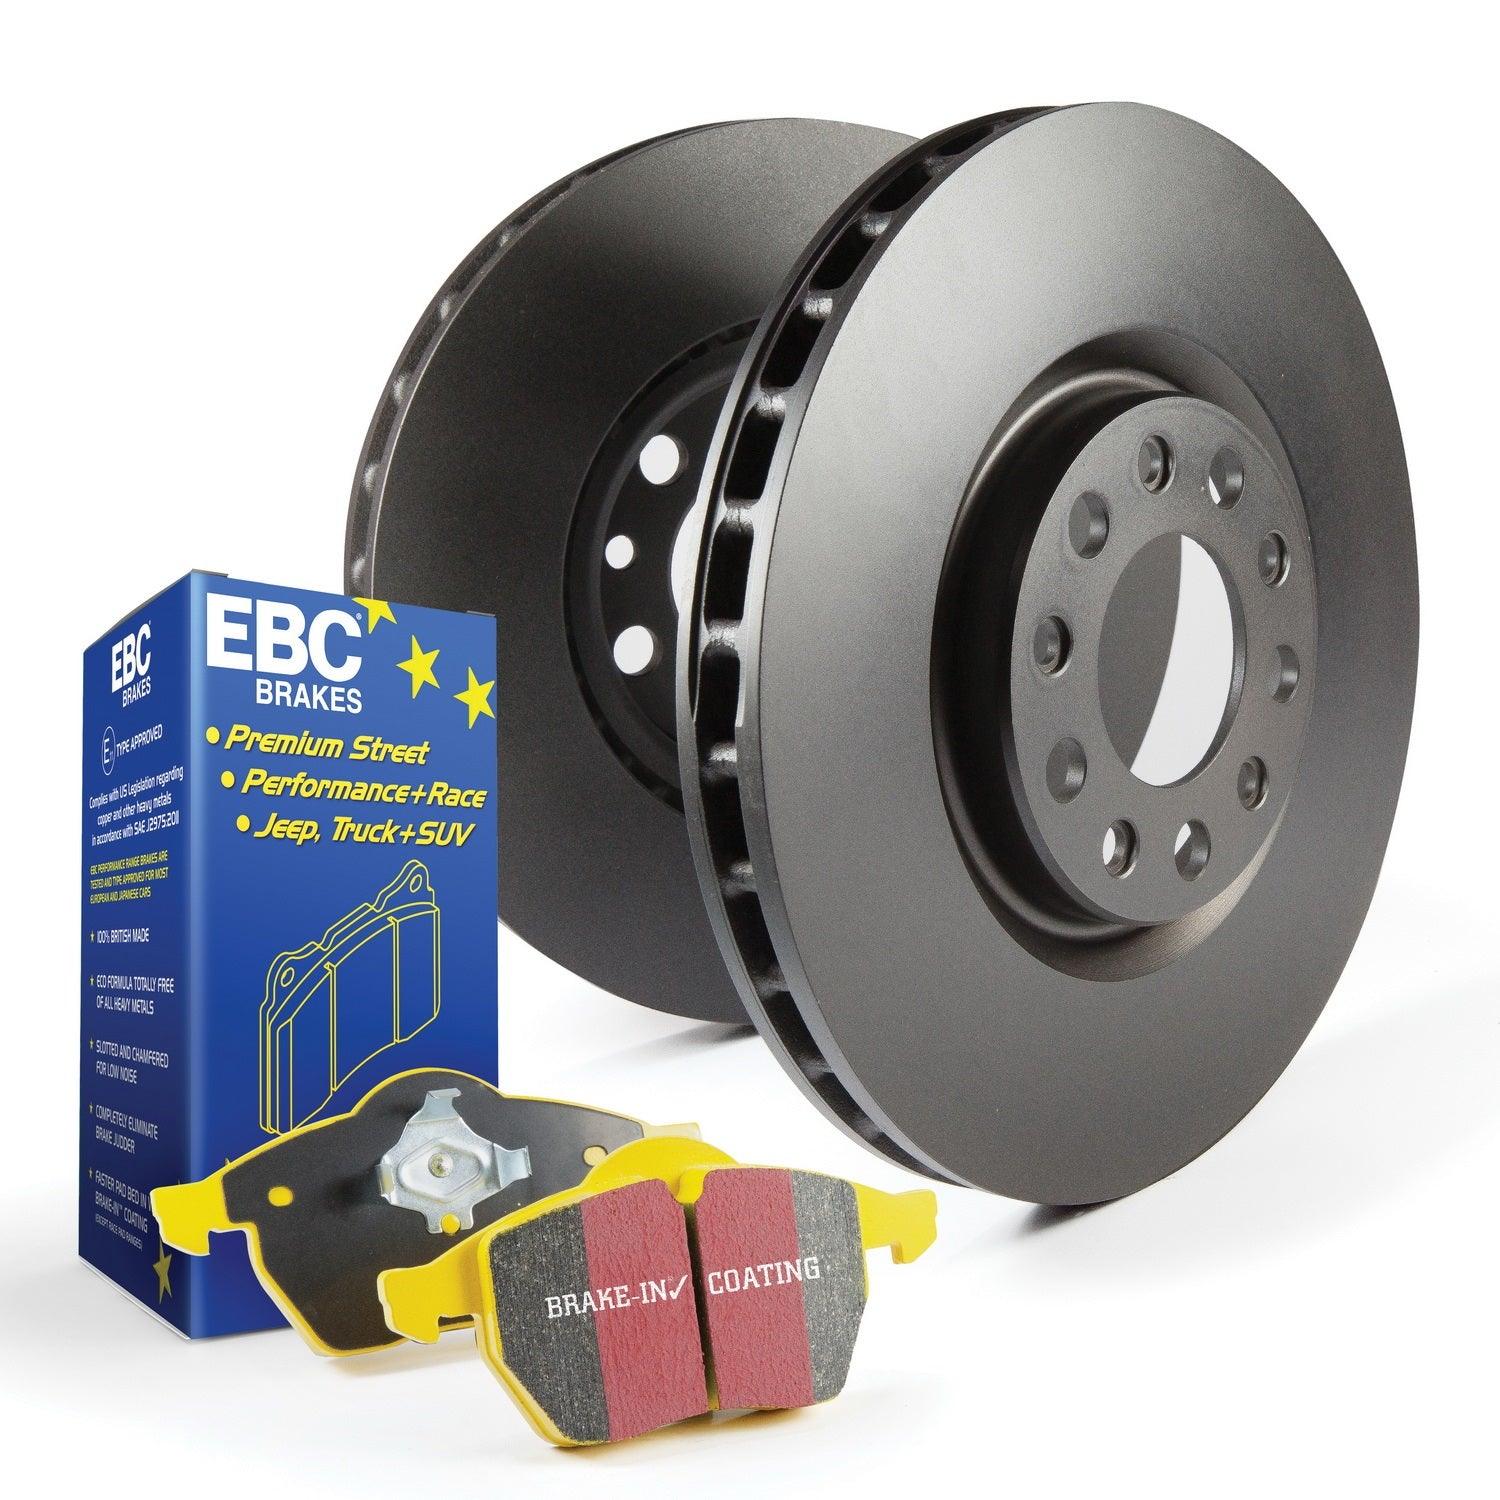 EBC Brakes S13KF1490 OE Quality replacement rotors, same spec as original  parts using G3000 Grey iron